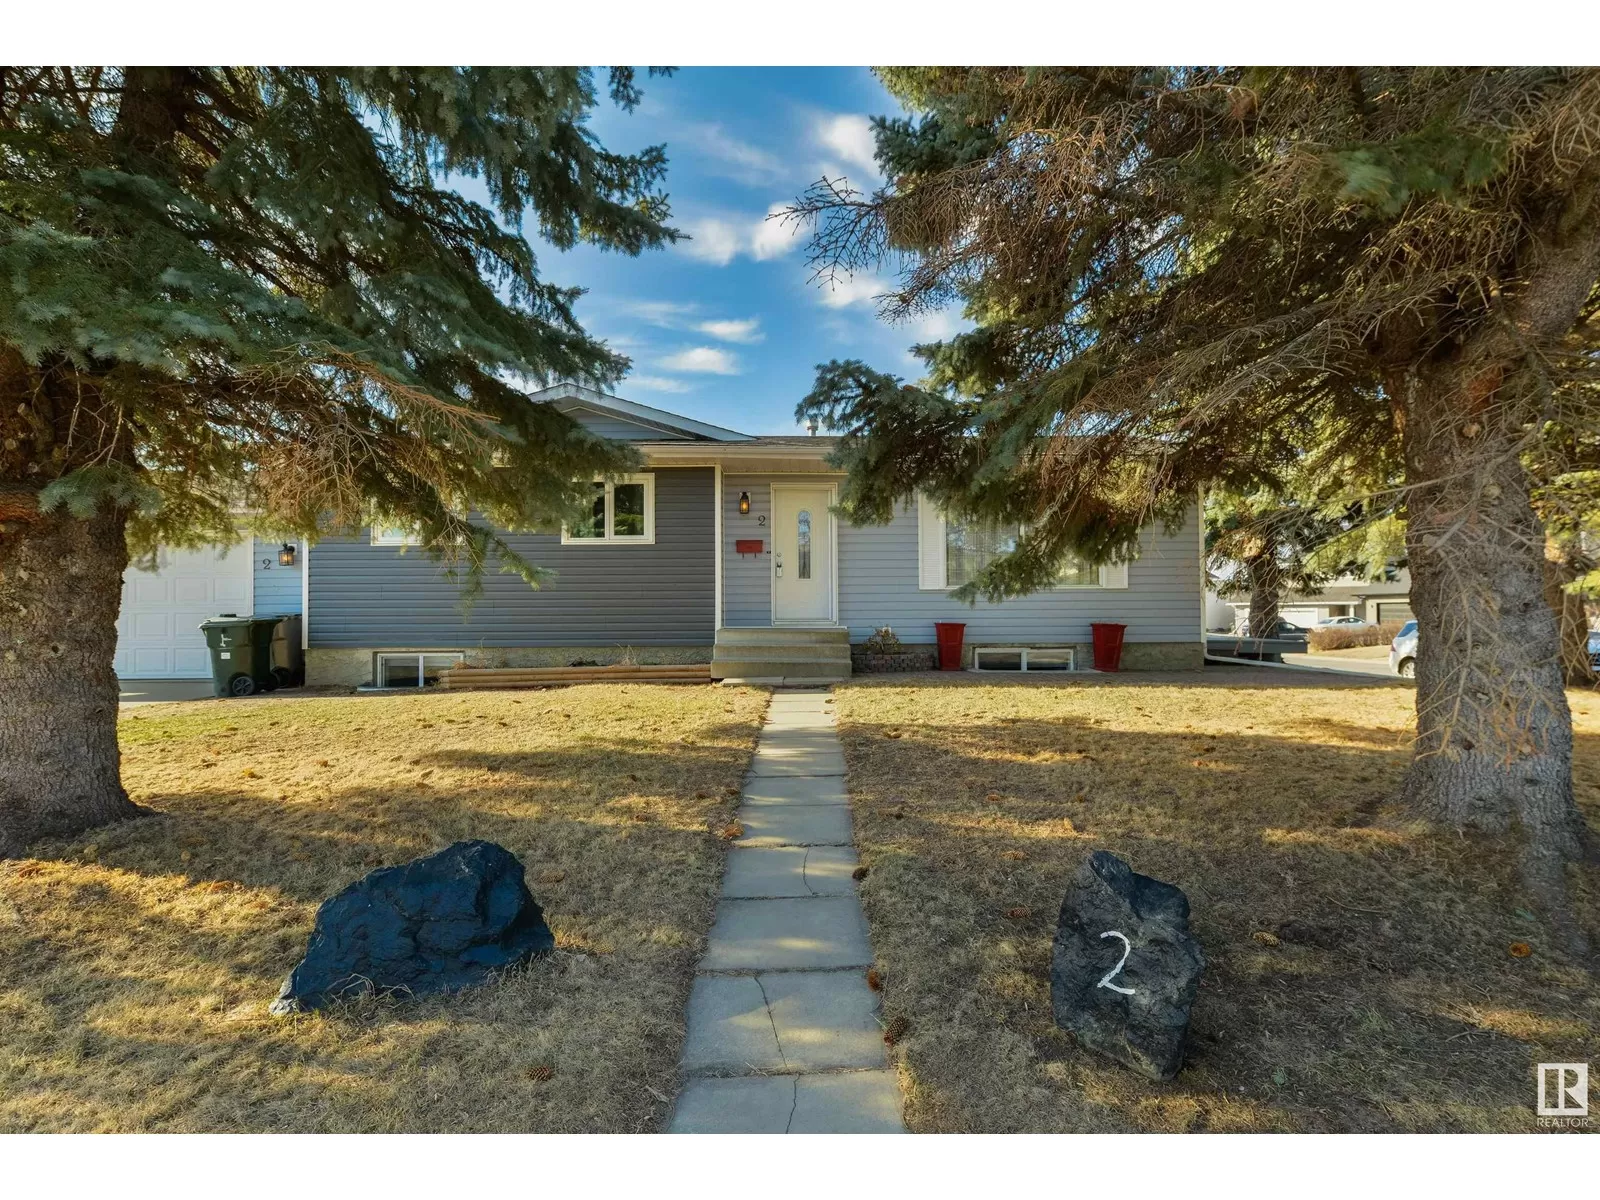 House for rent: 2 Glenmanor Cr, Stony Plain, Alberta T7Z 1A6